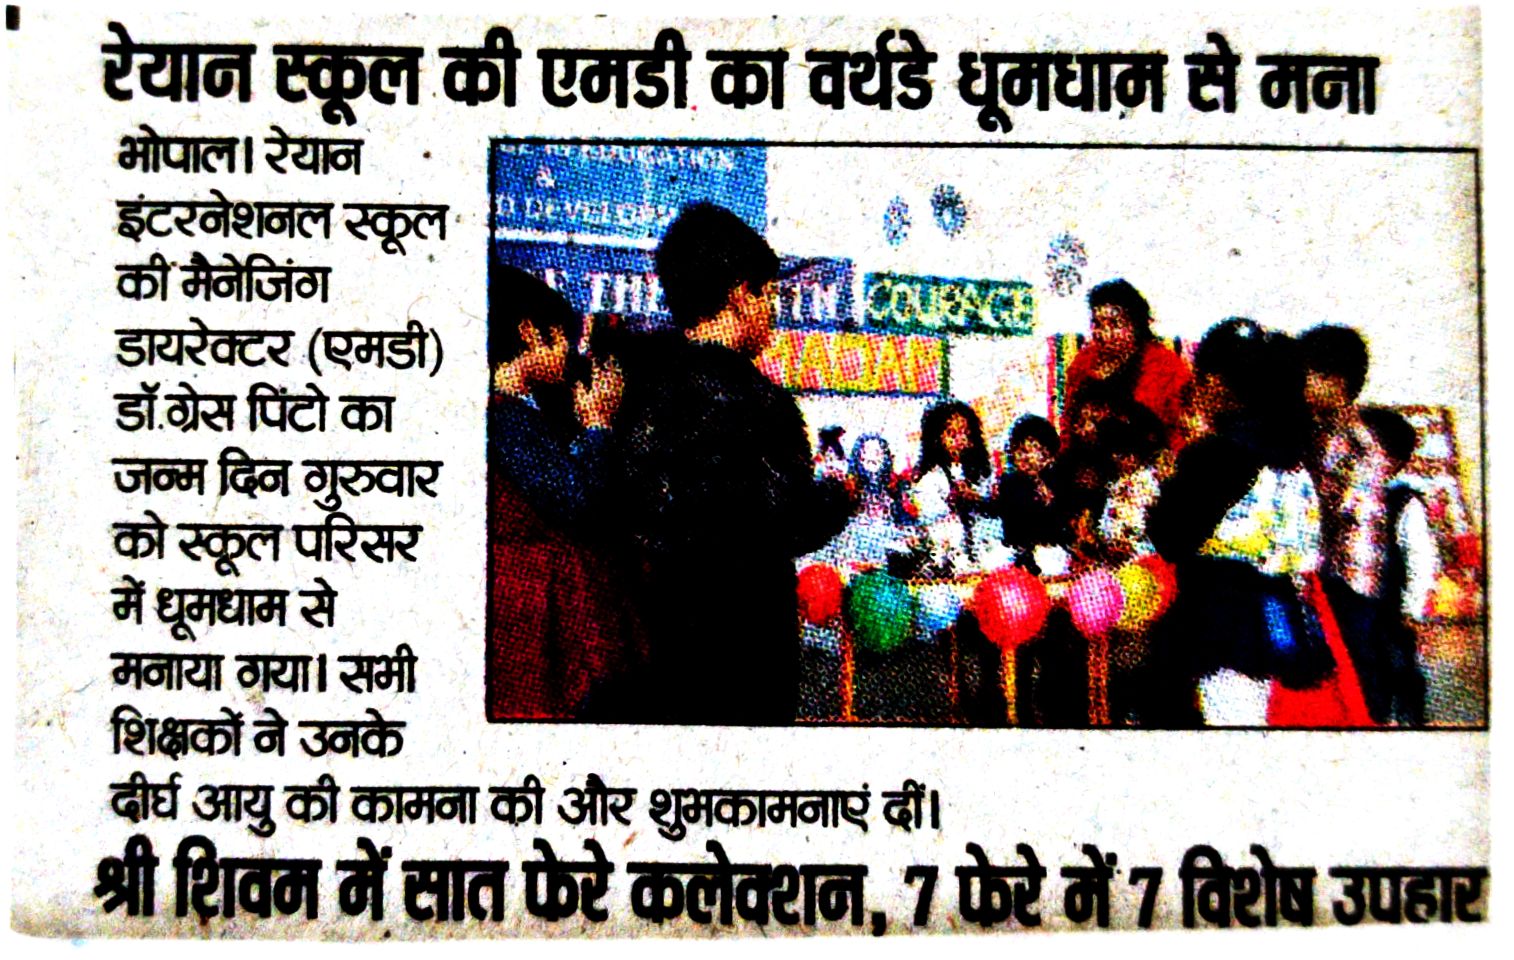 Grand celebration of MD Madam’s Birthday’ - Hari Bhoomi - Ryan International School, Bhopal